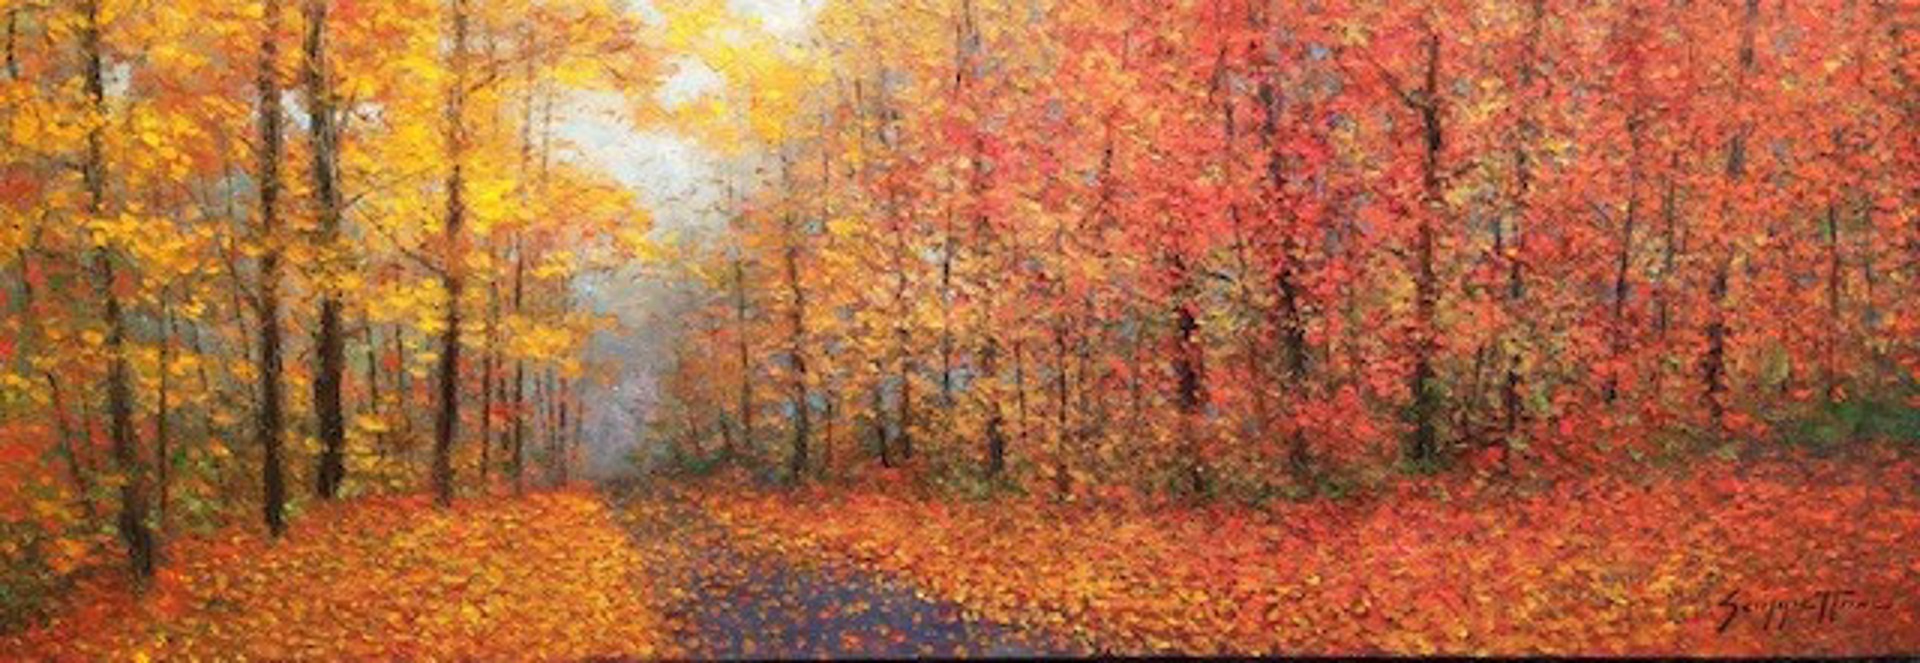 Foggy Autumn Lane by James Scoppettone